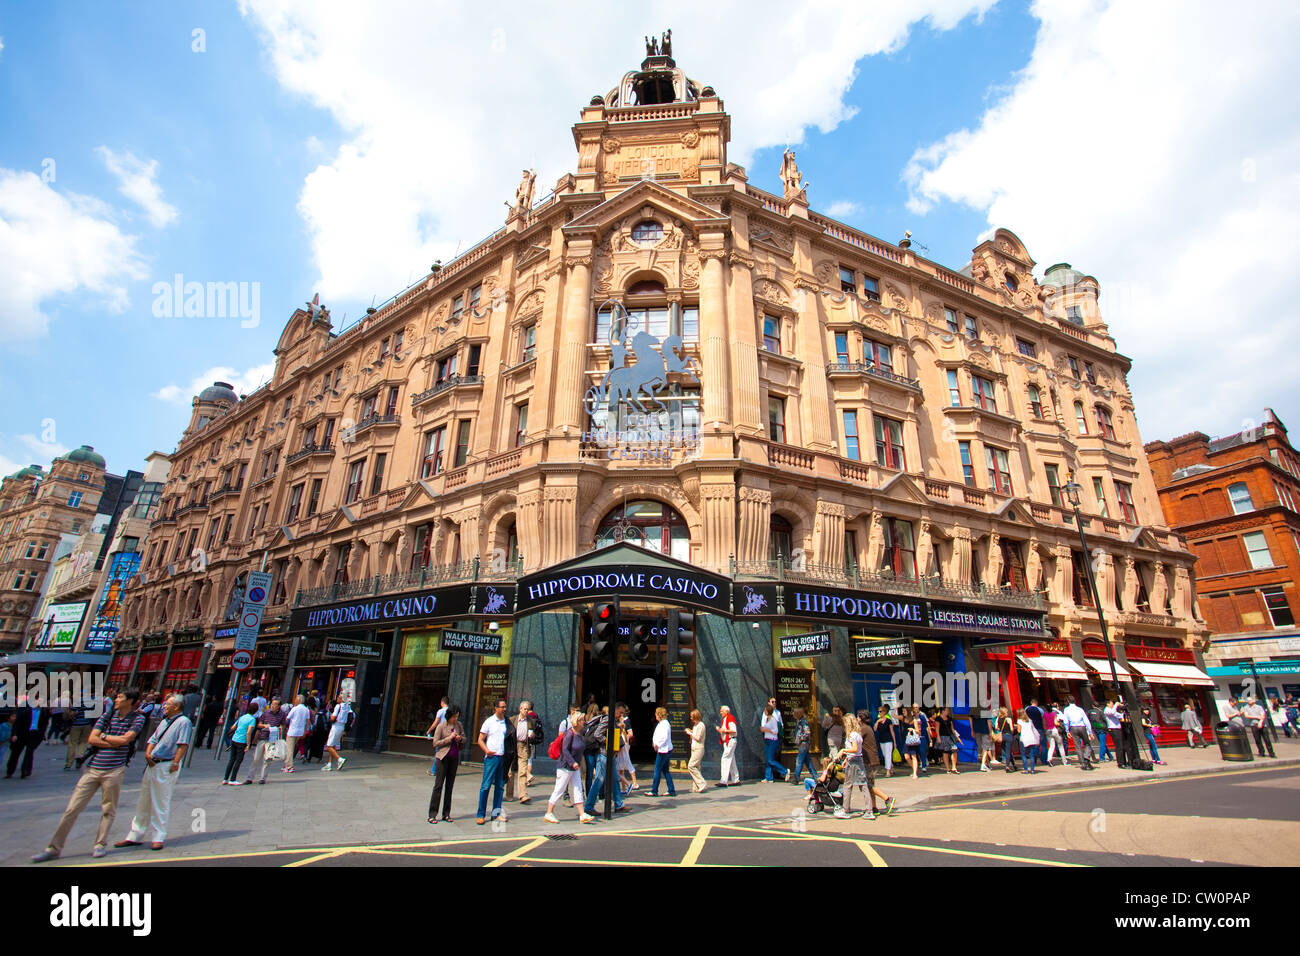 Das Hippodrome Casino, Leicester Square, central London, England, UK Stockfoto